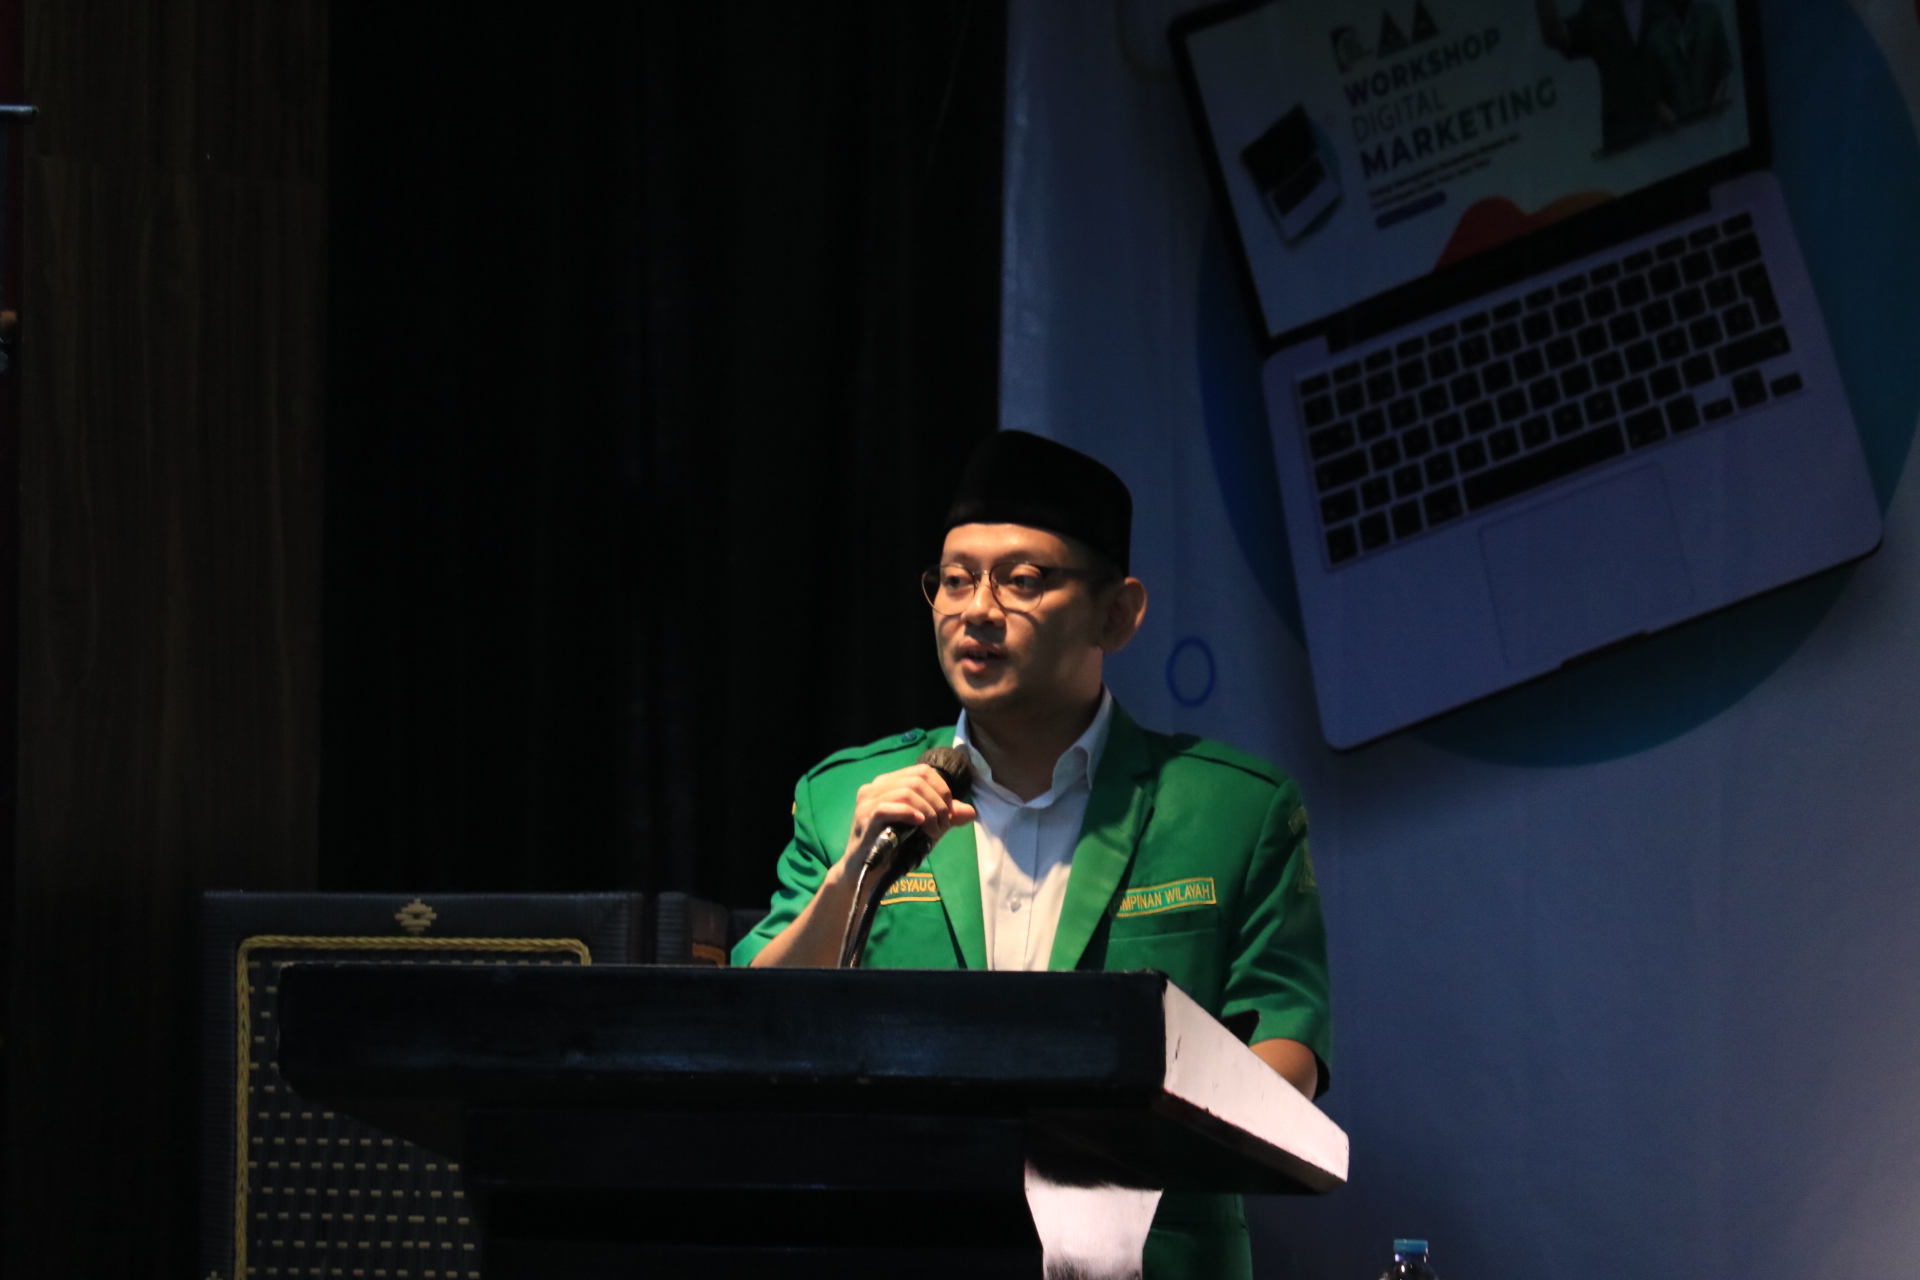 Kembangkan Sayap Usaha Online, Ansor Jatim Adakan Workshop Digital Marketing